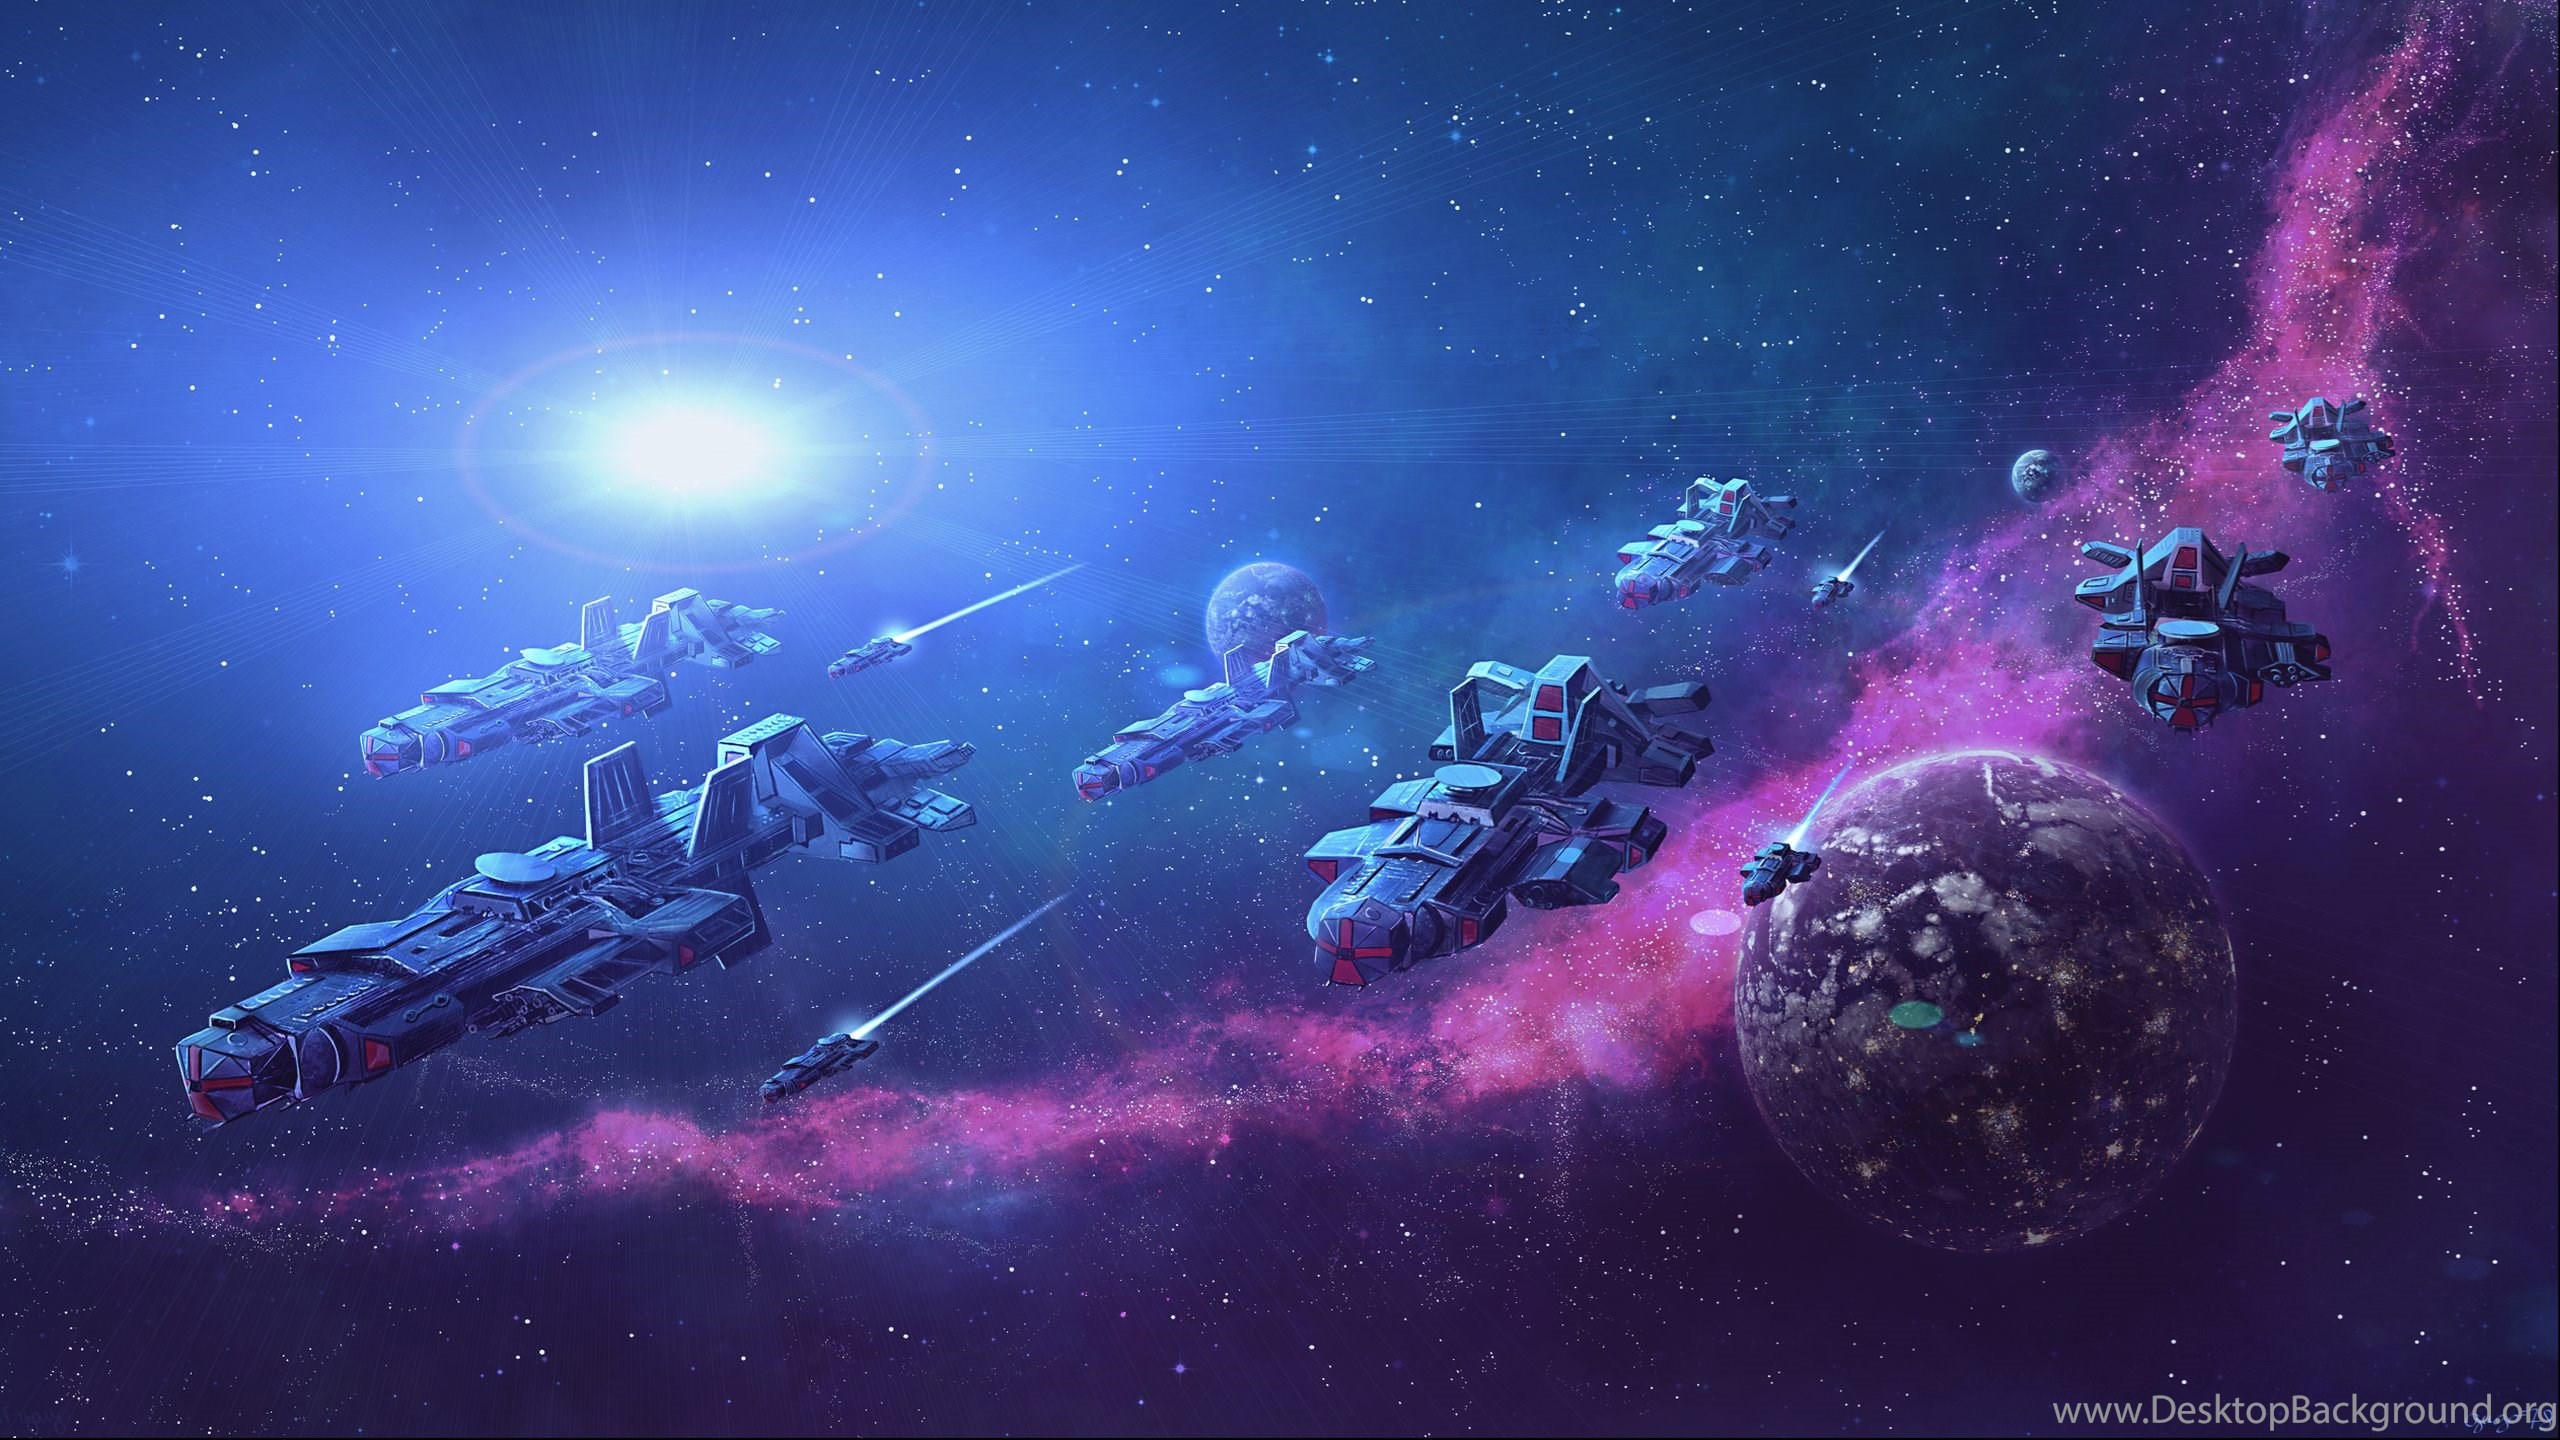 Space Planets Sci Fi Wallpaper HD Free Download Desktop Desktop Background